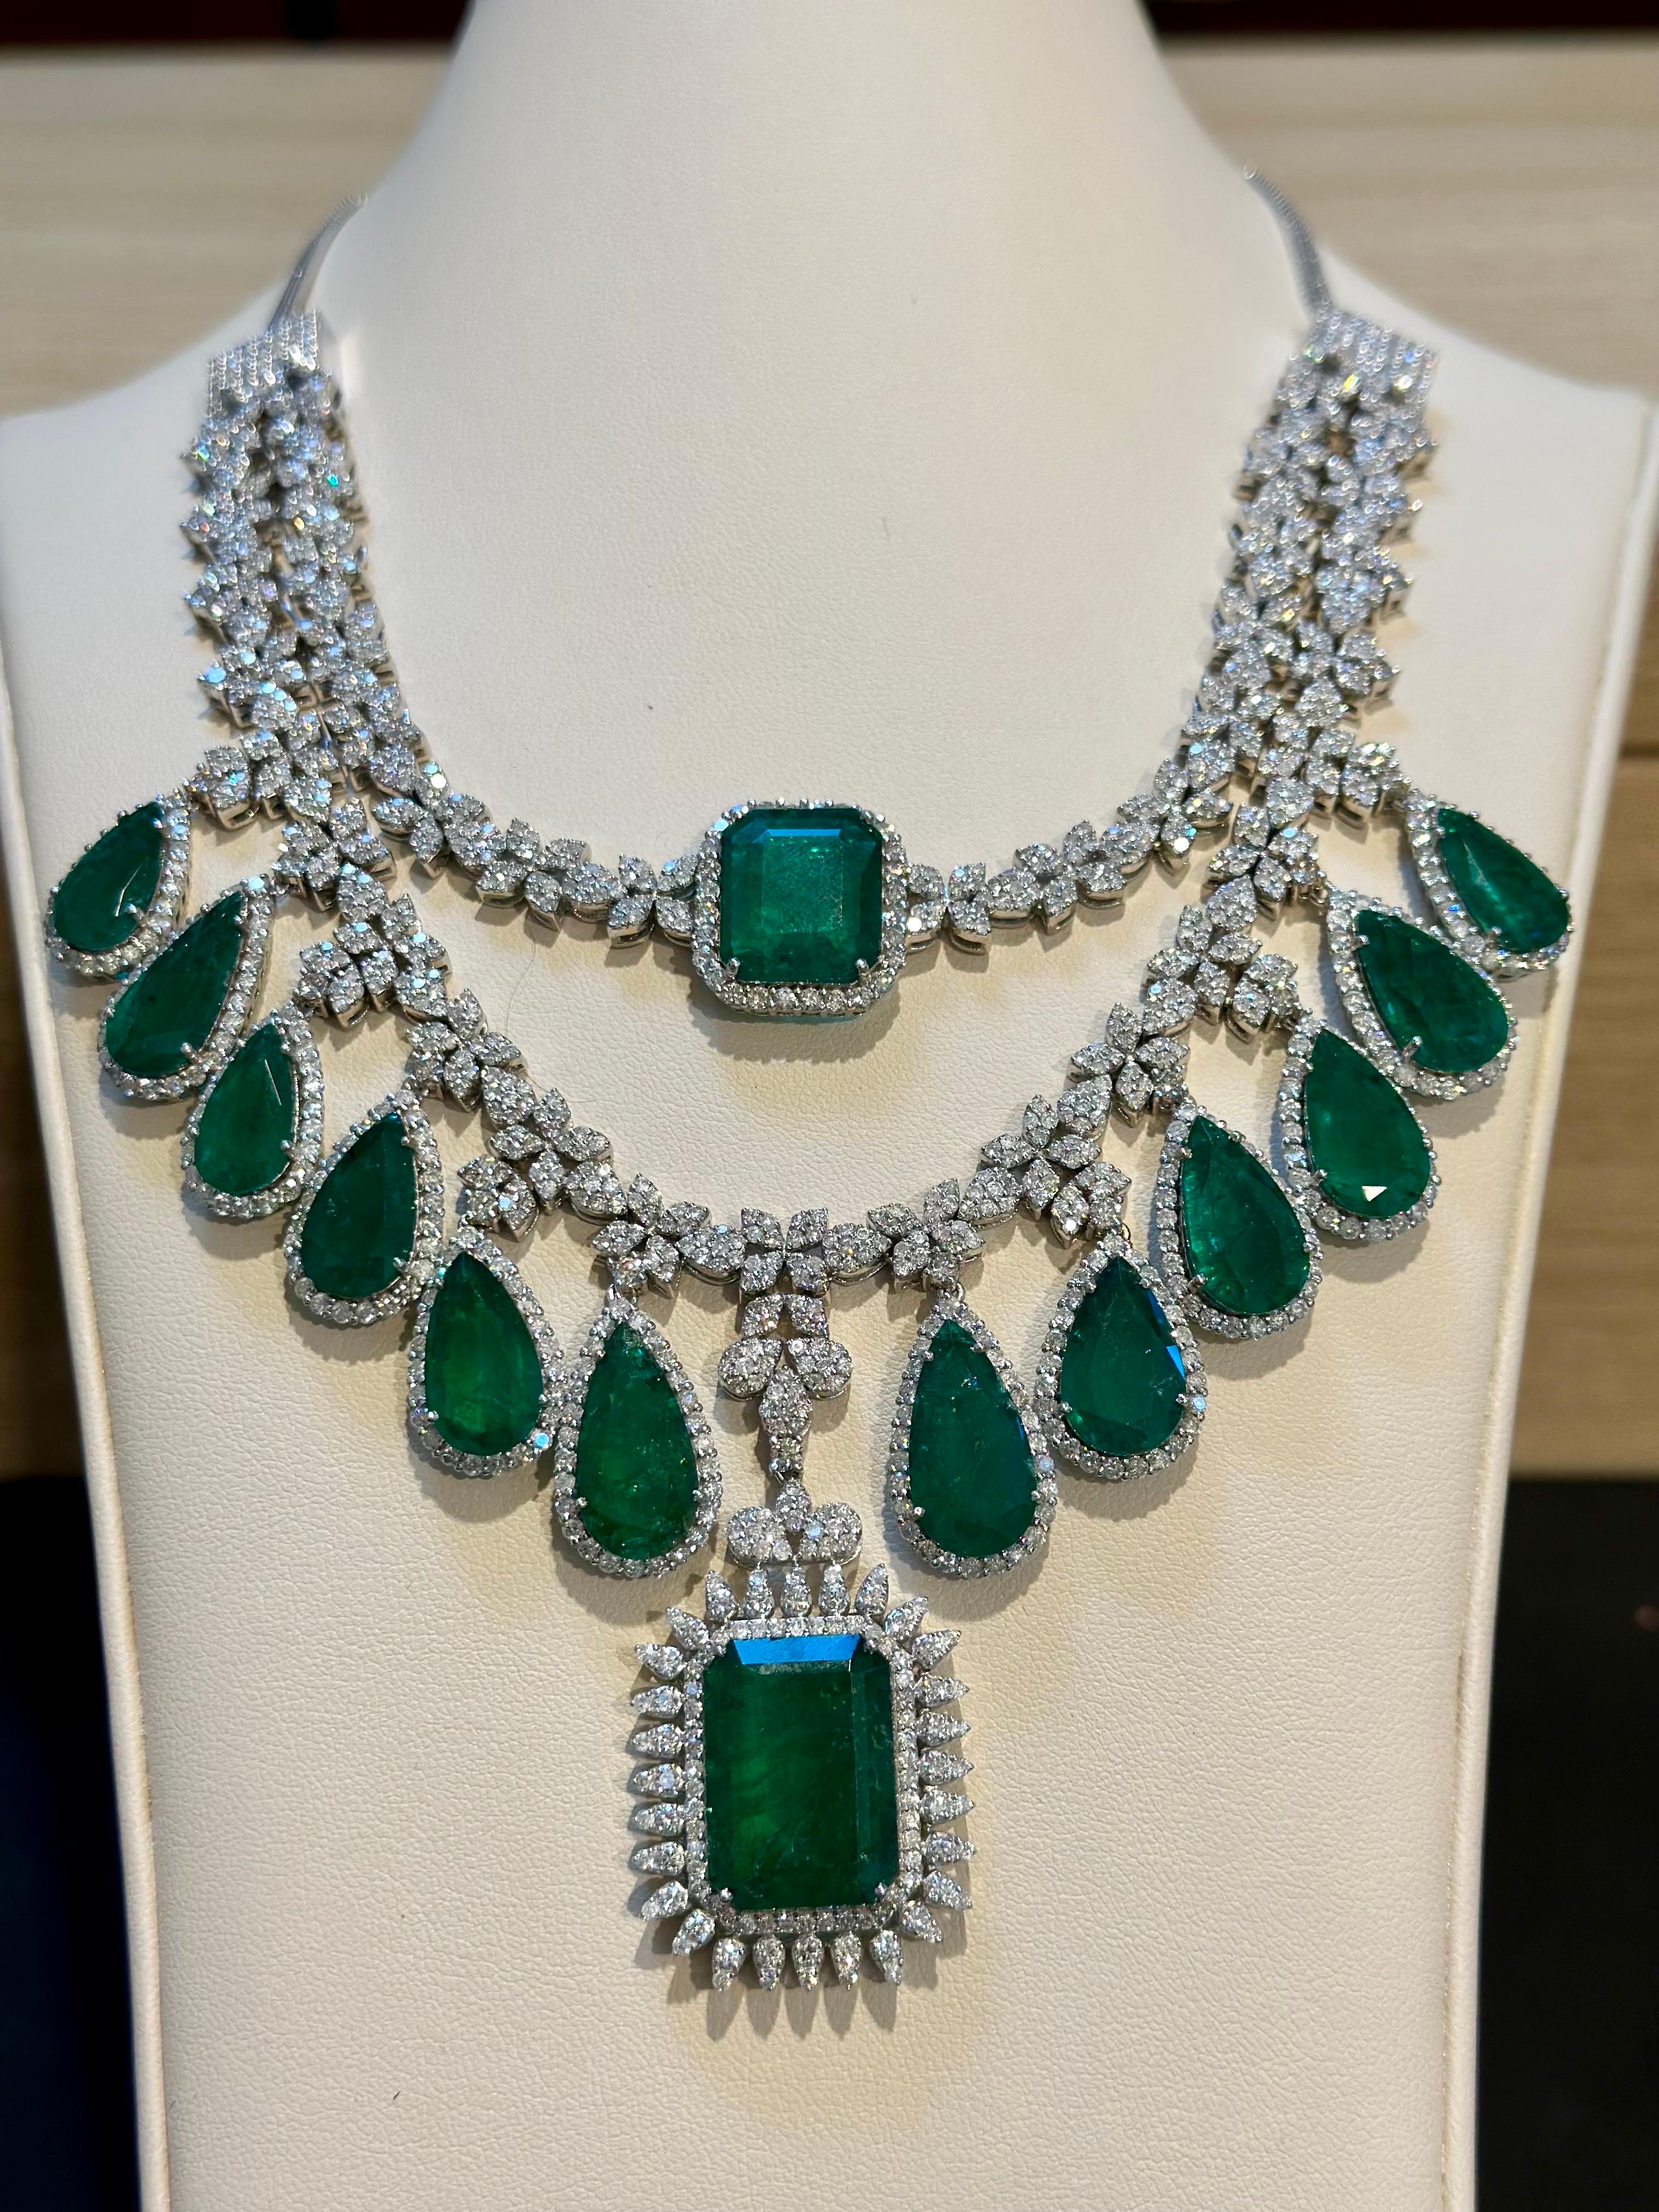 80 Ct solitaire Zambian Emerald & 25Ct Diamond Fringe Necklace detachable layers 3